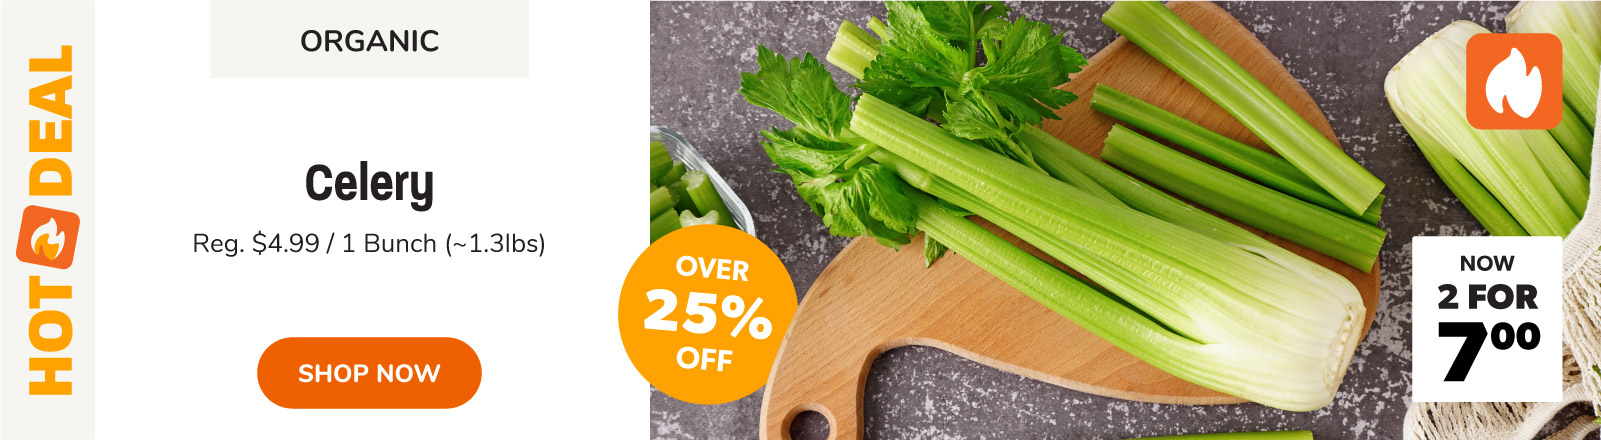 save on organic celery this week